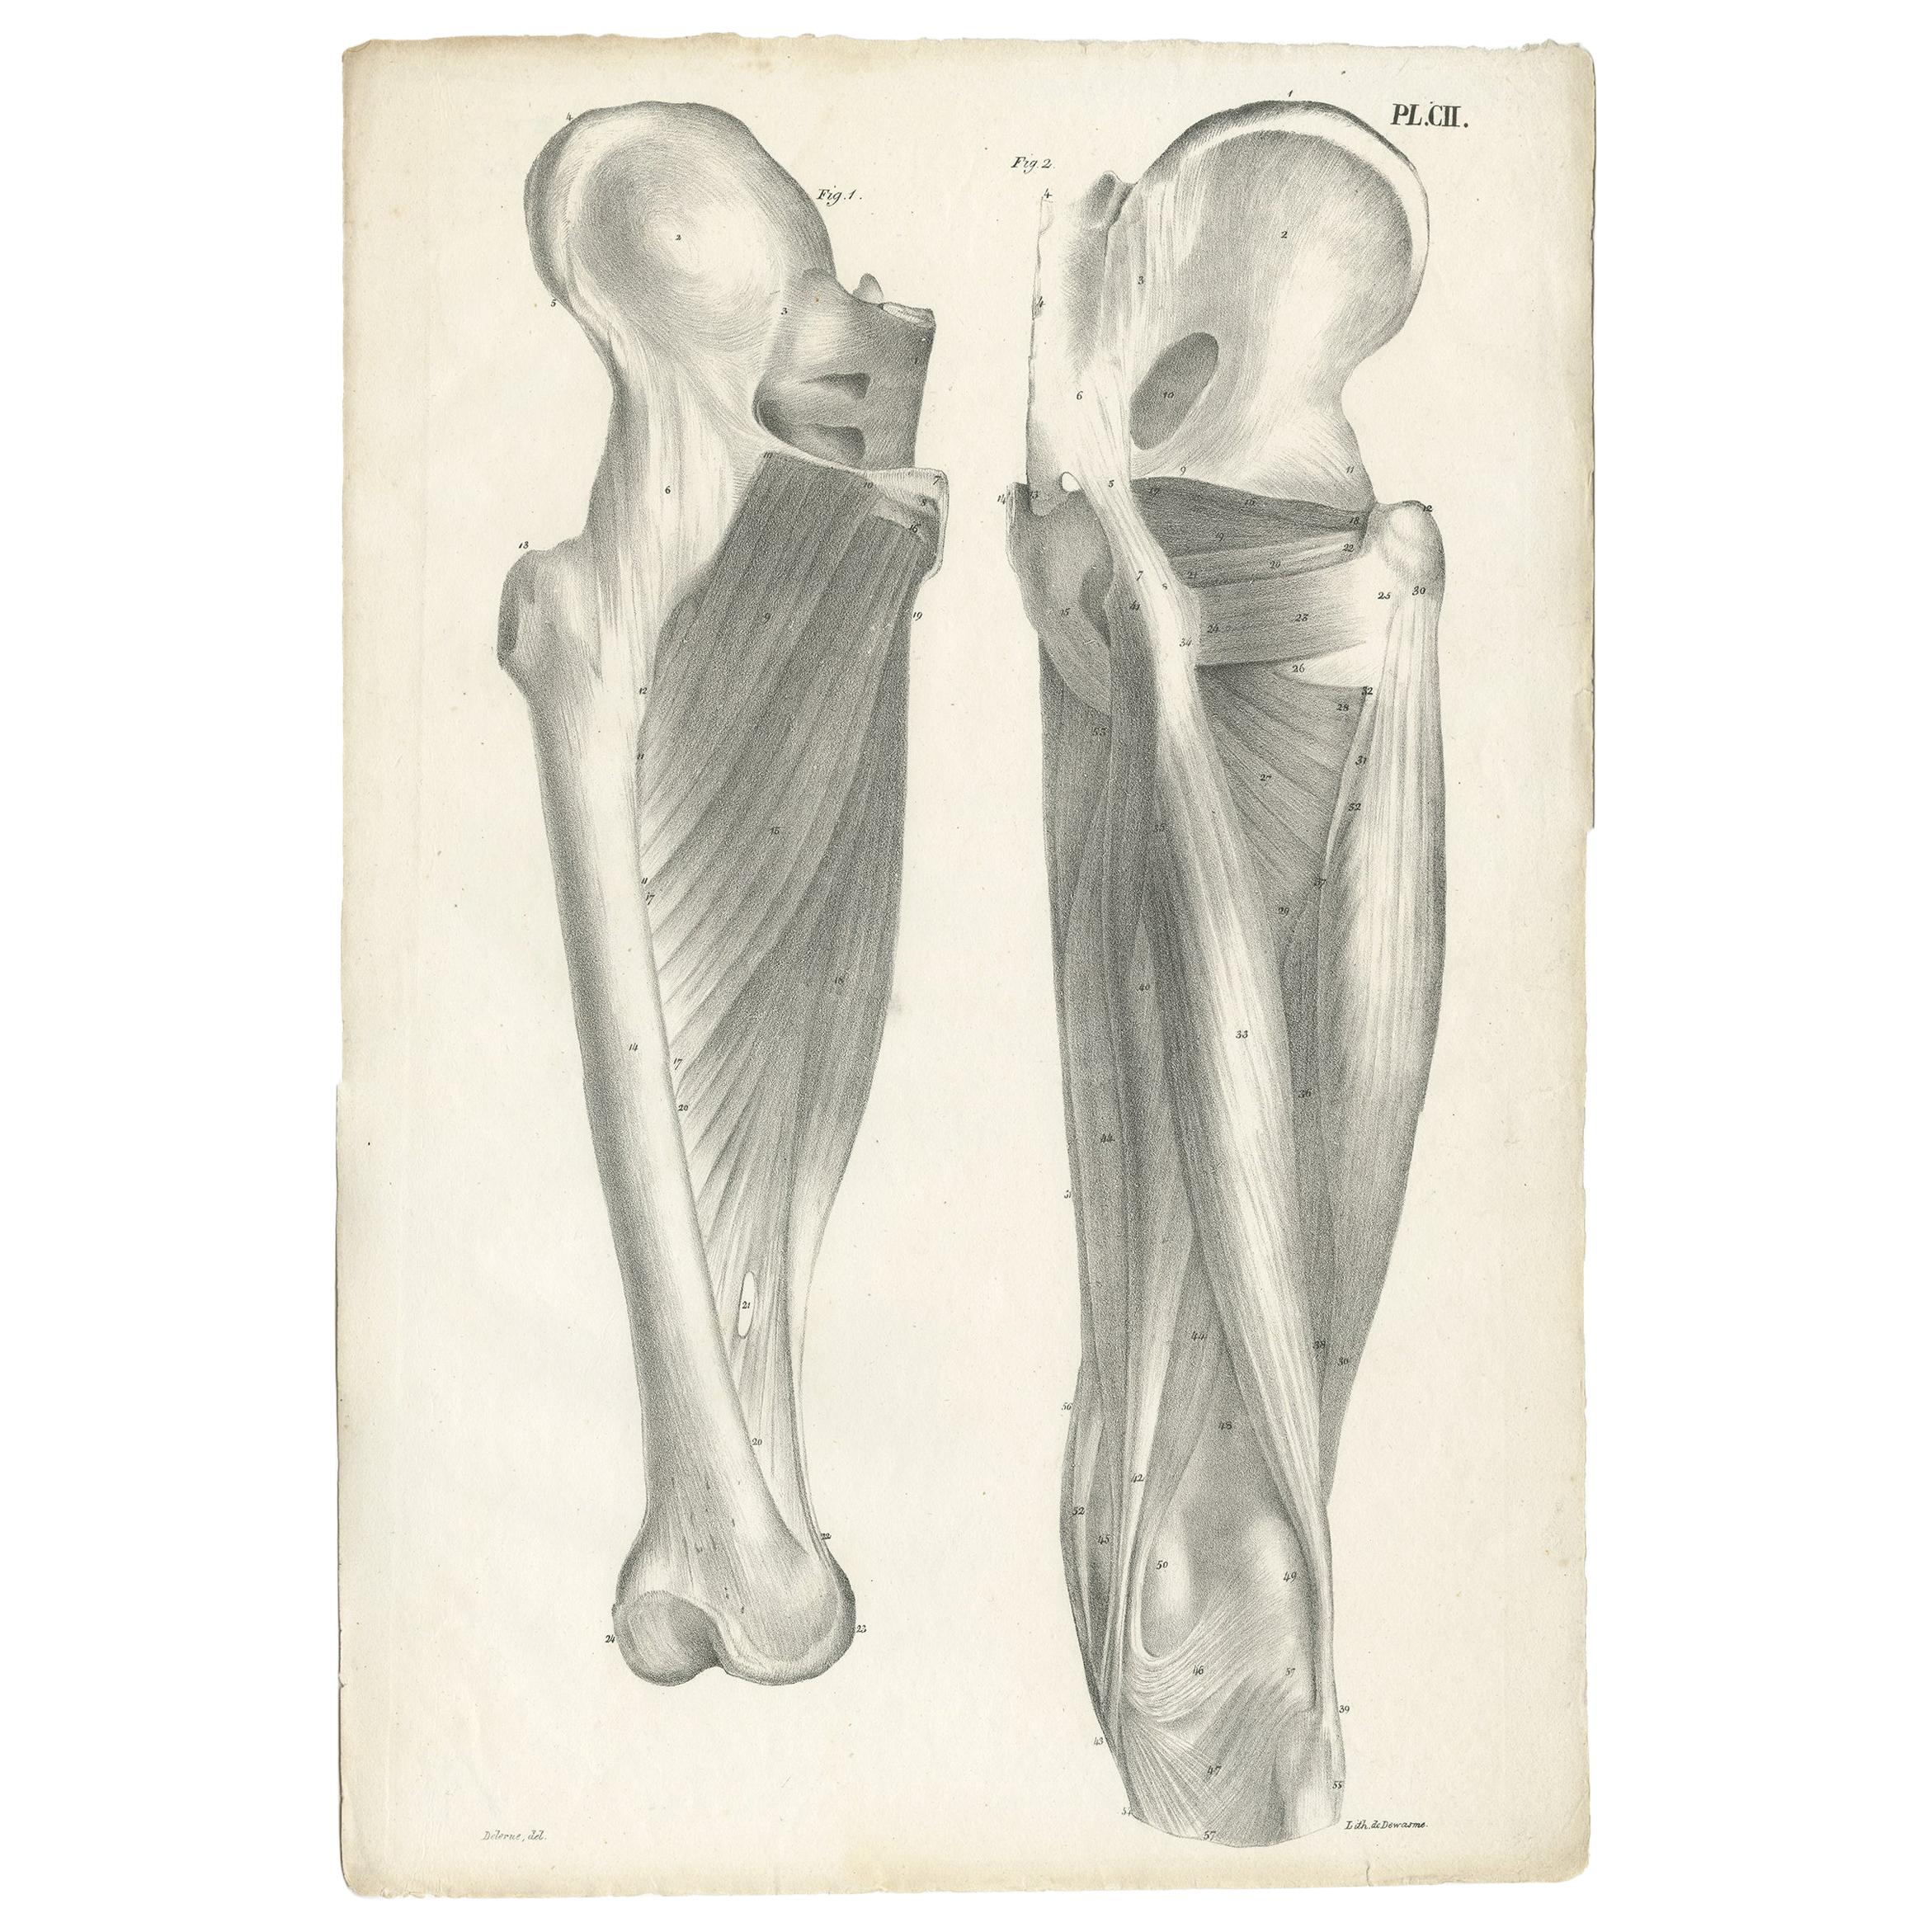 Pl. CII Antique Anatomy / Medical Print of the Thigh by Cloquet ‘1821’